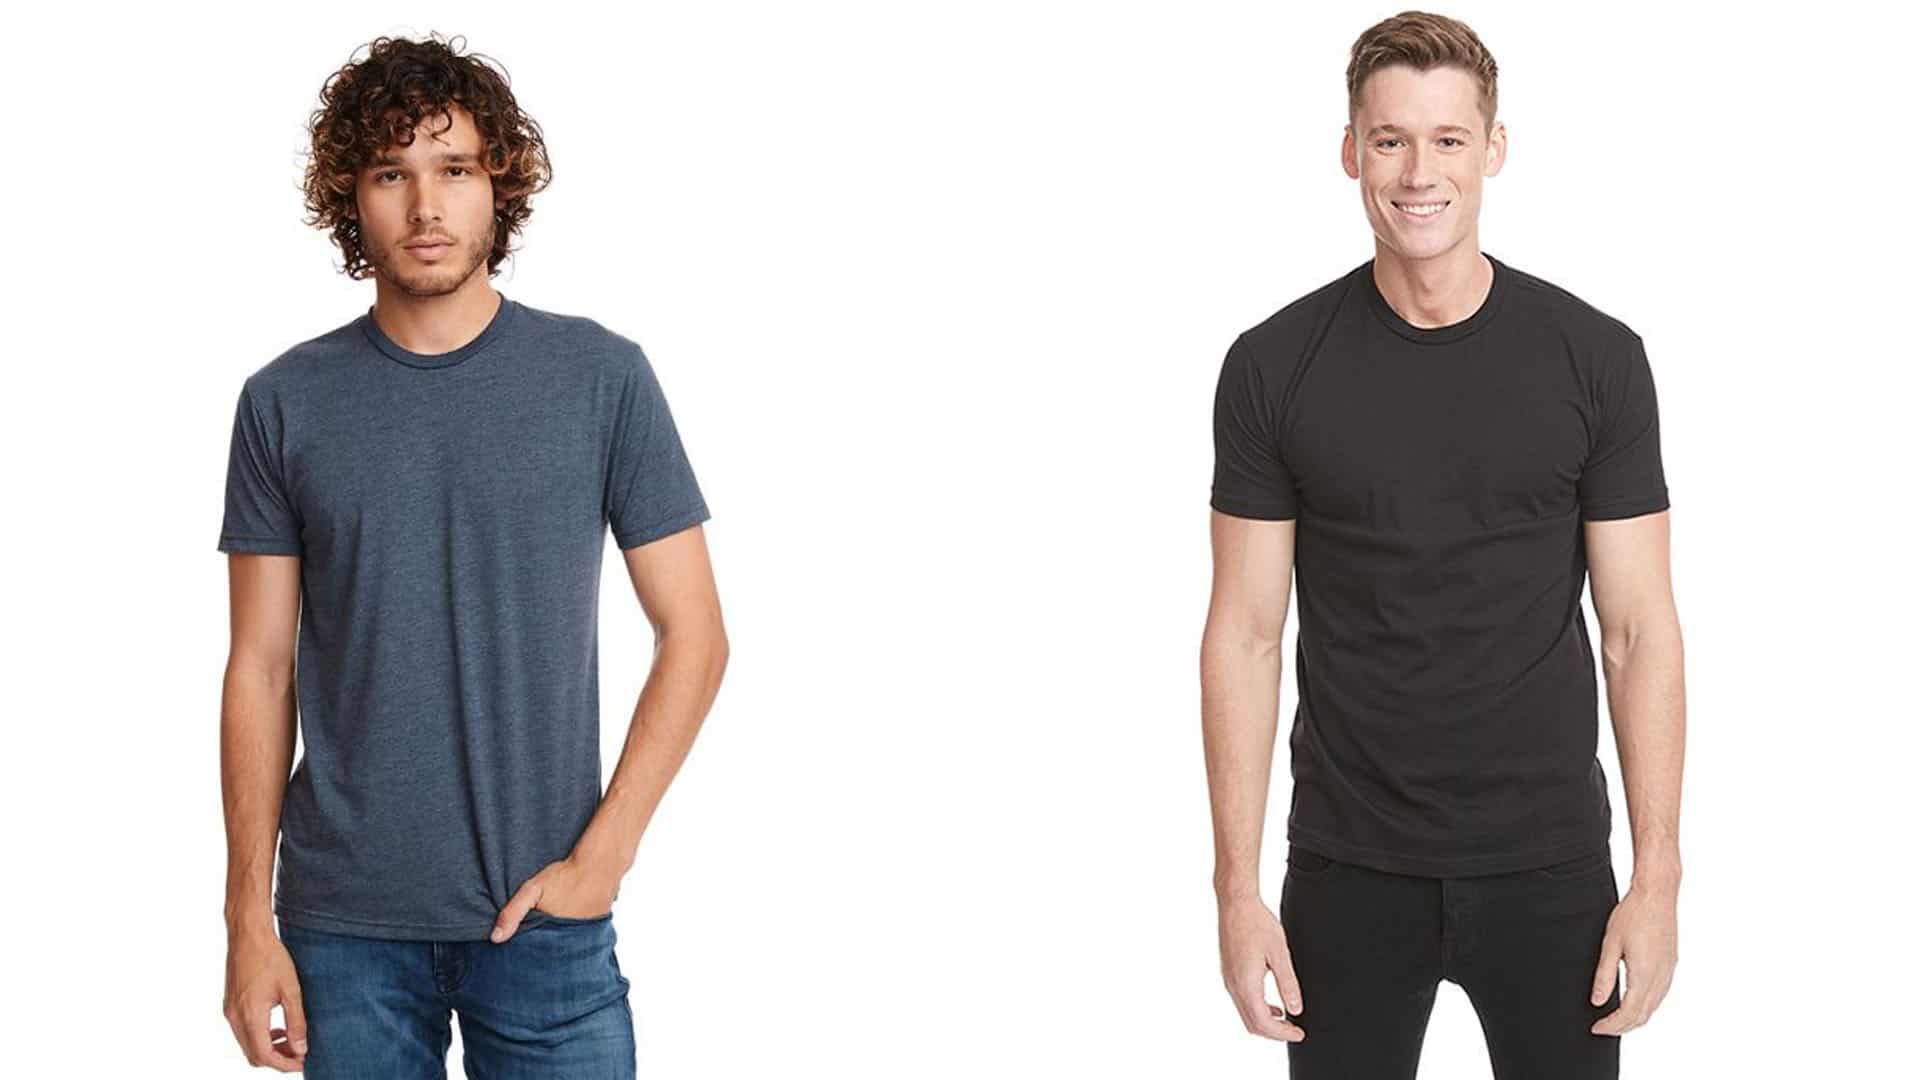 Tri-blend vs Cotton T-shirts